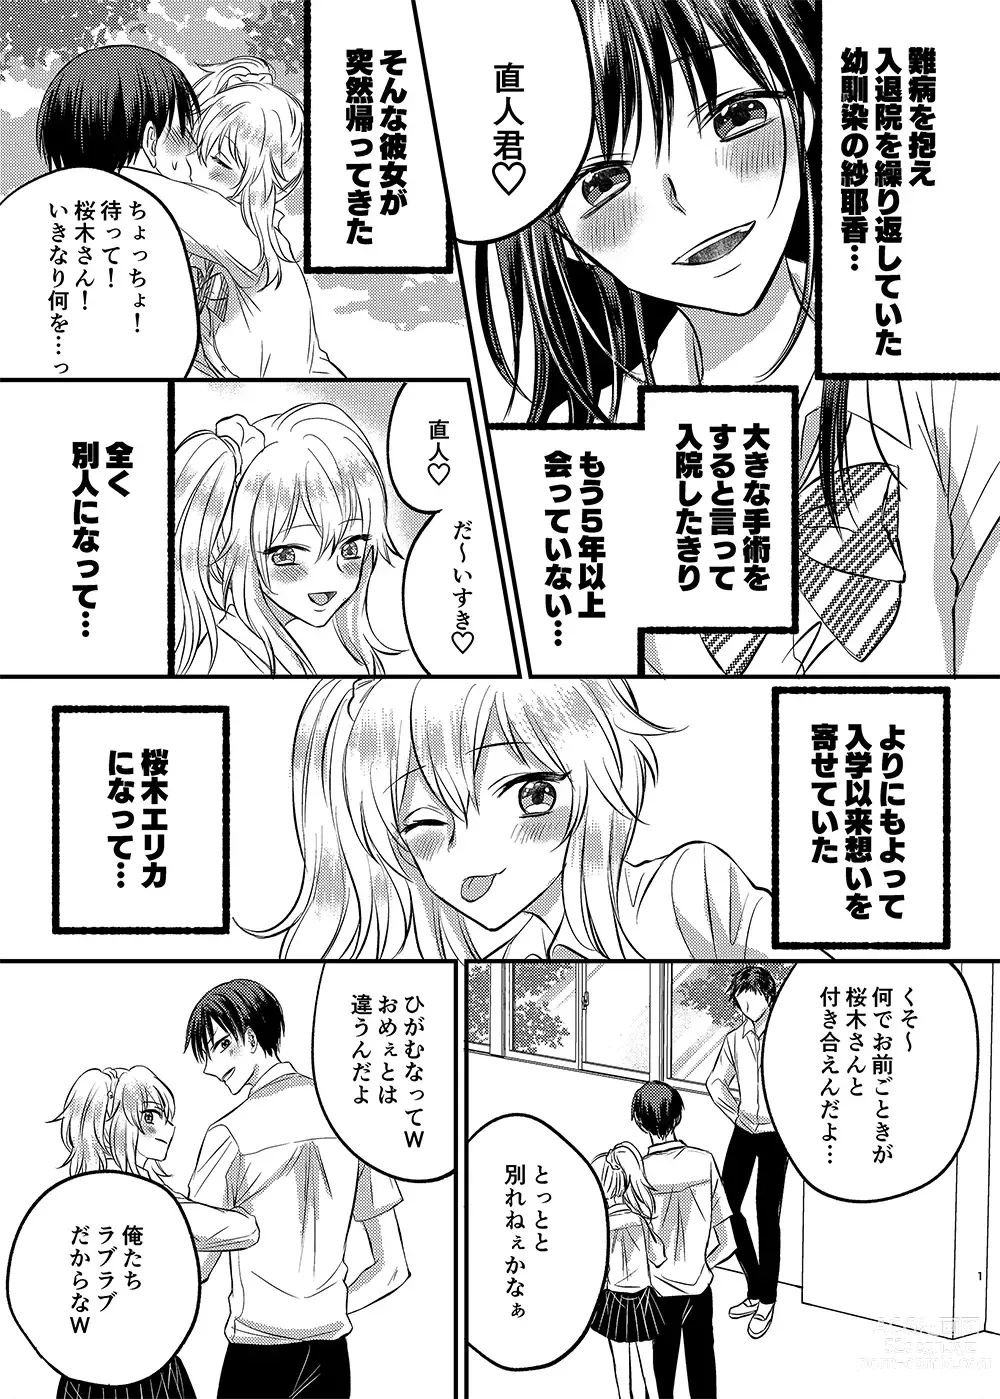 Page 1 of doujinshi Irekawari Cinderella